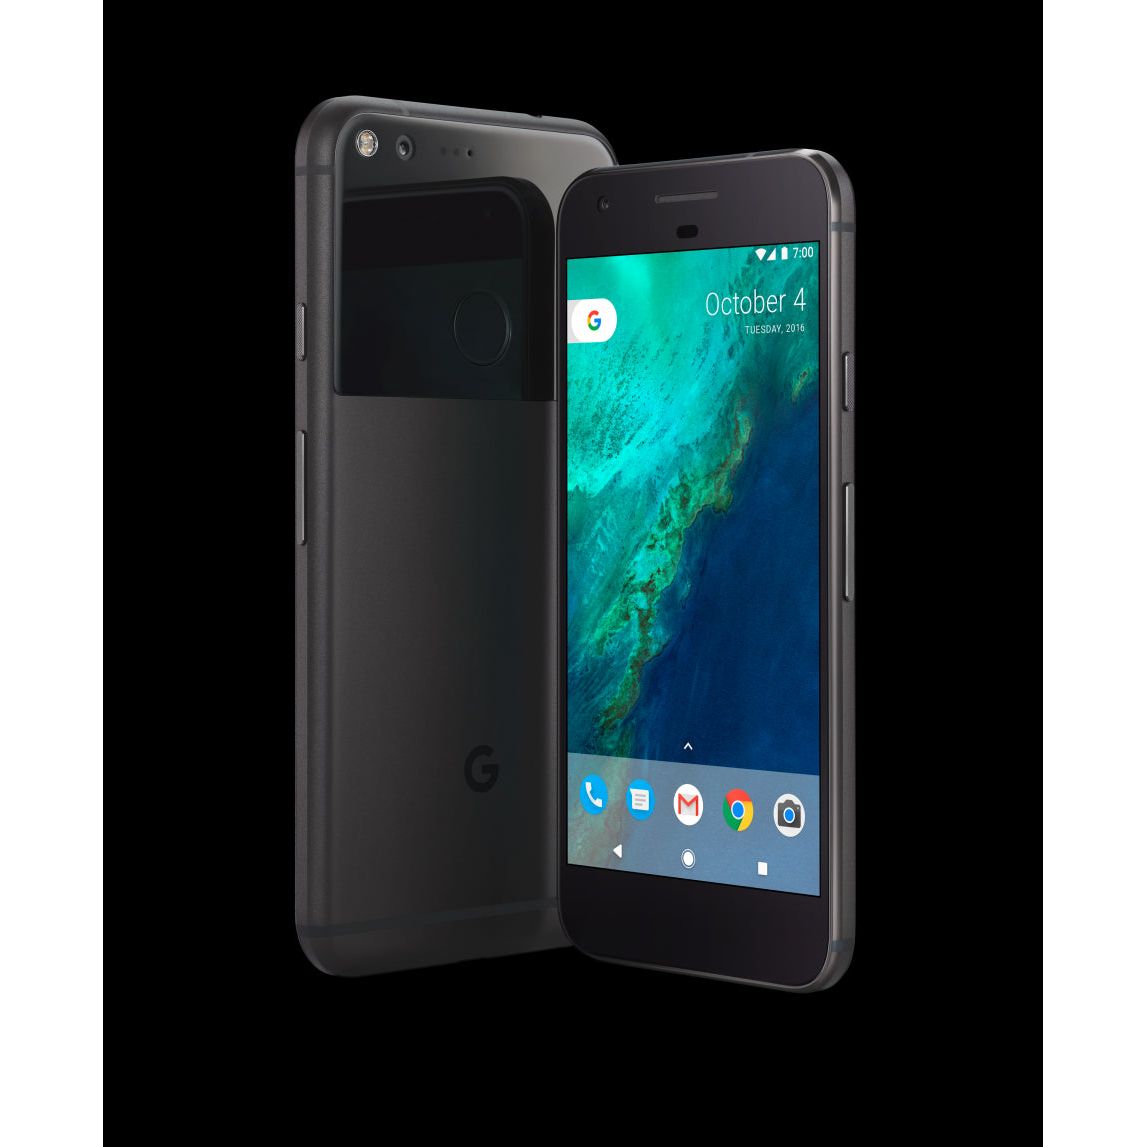 Google Pixel - 32 GB - Quite Black - Unlocked - CDMA/GSM